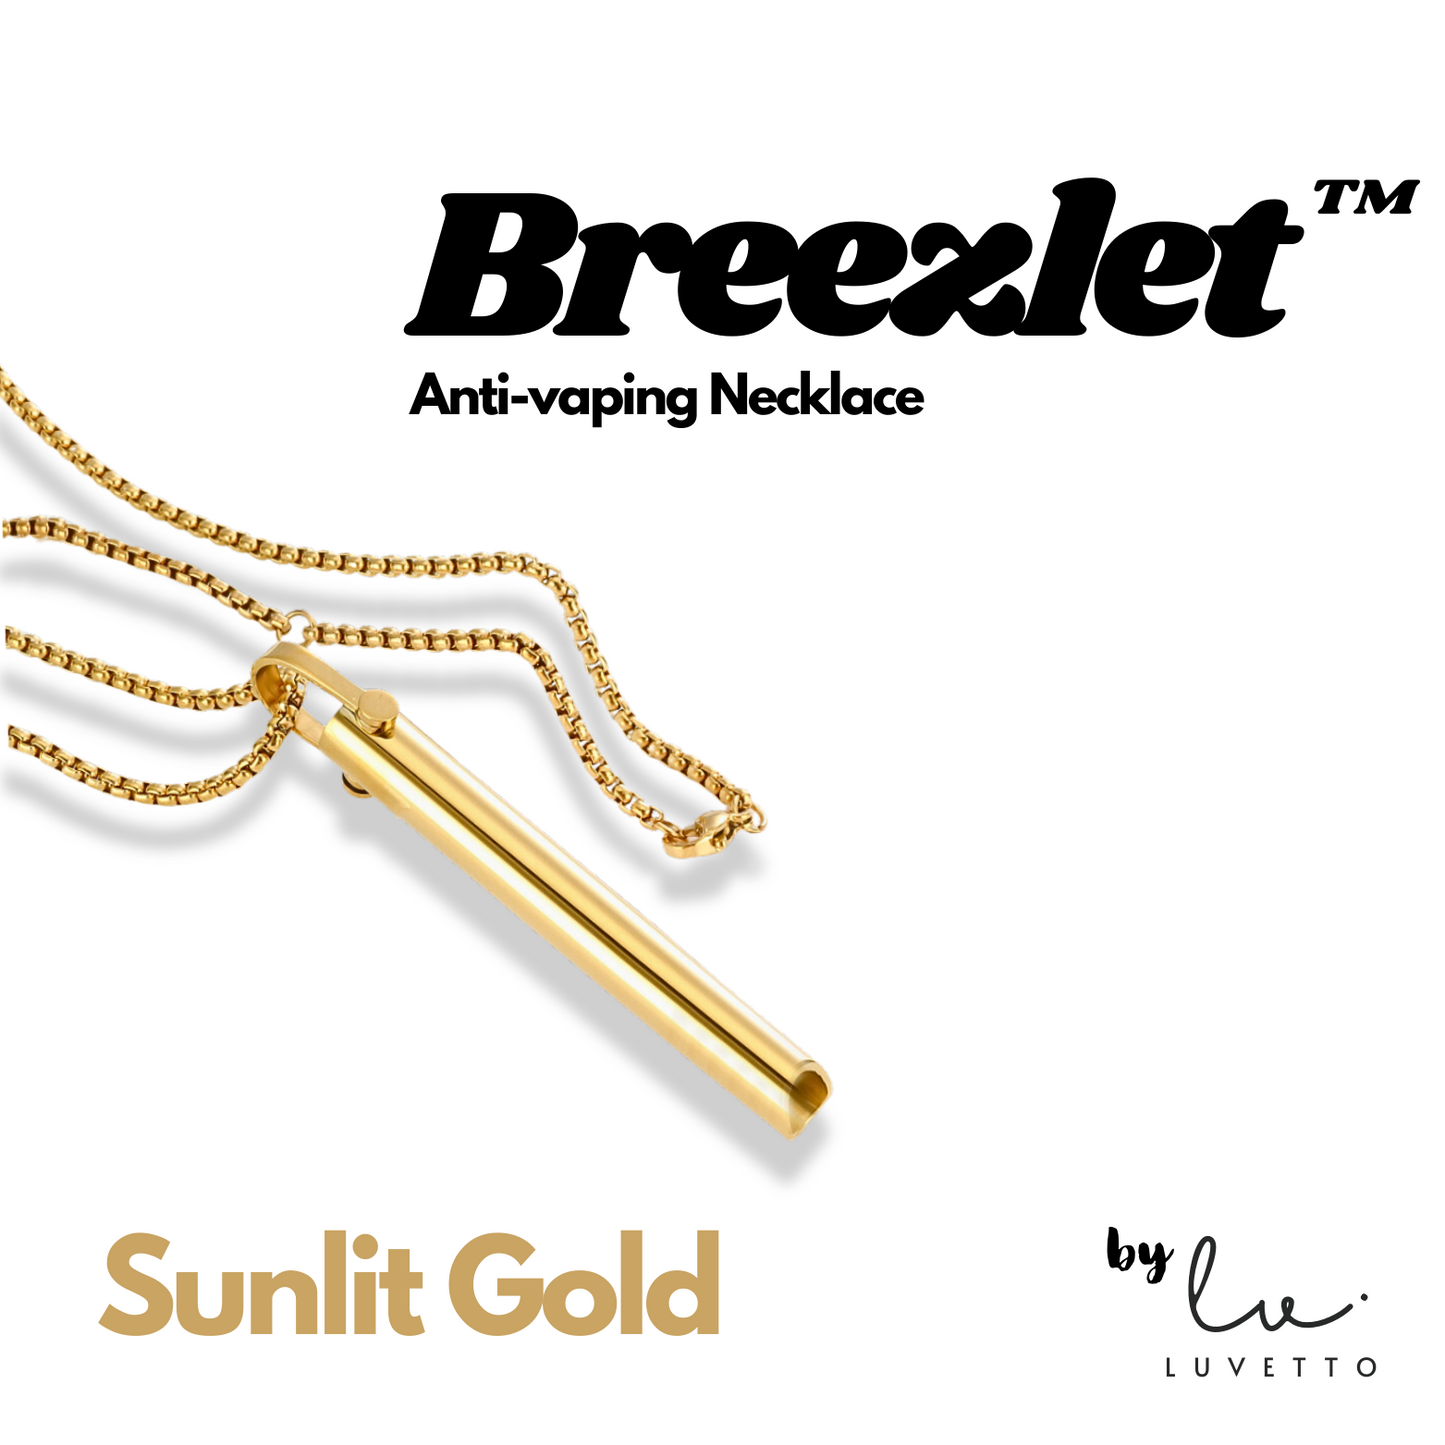 Breezlet™ Anti-vaping Necklace